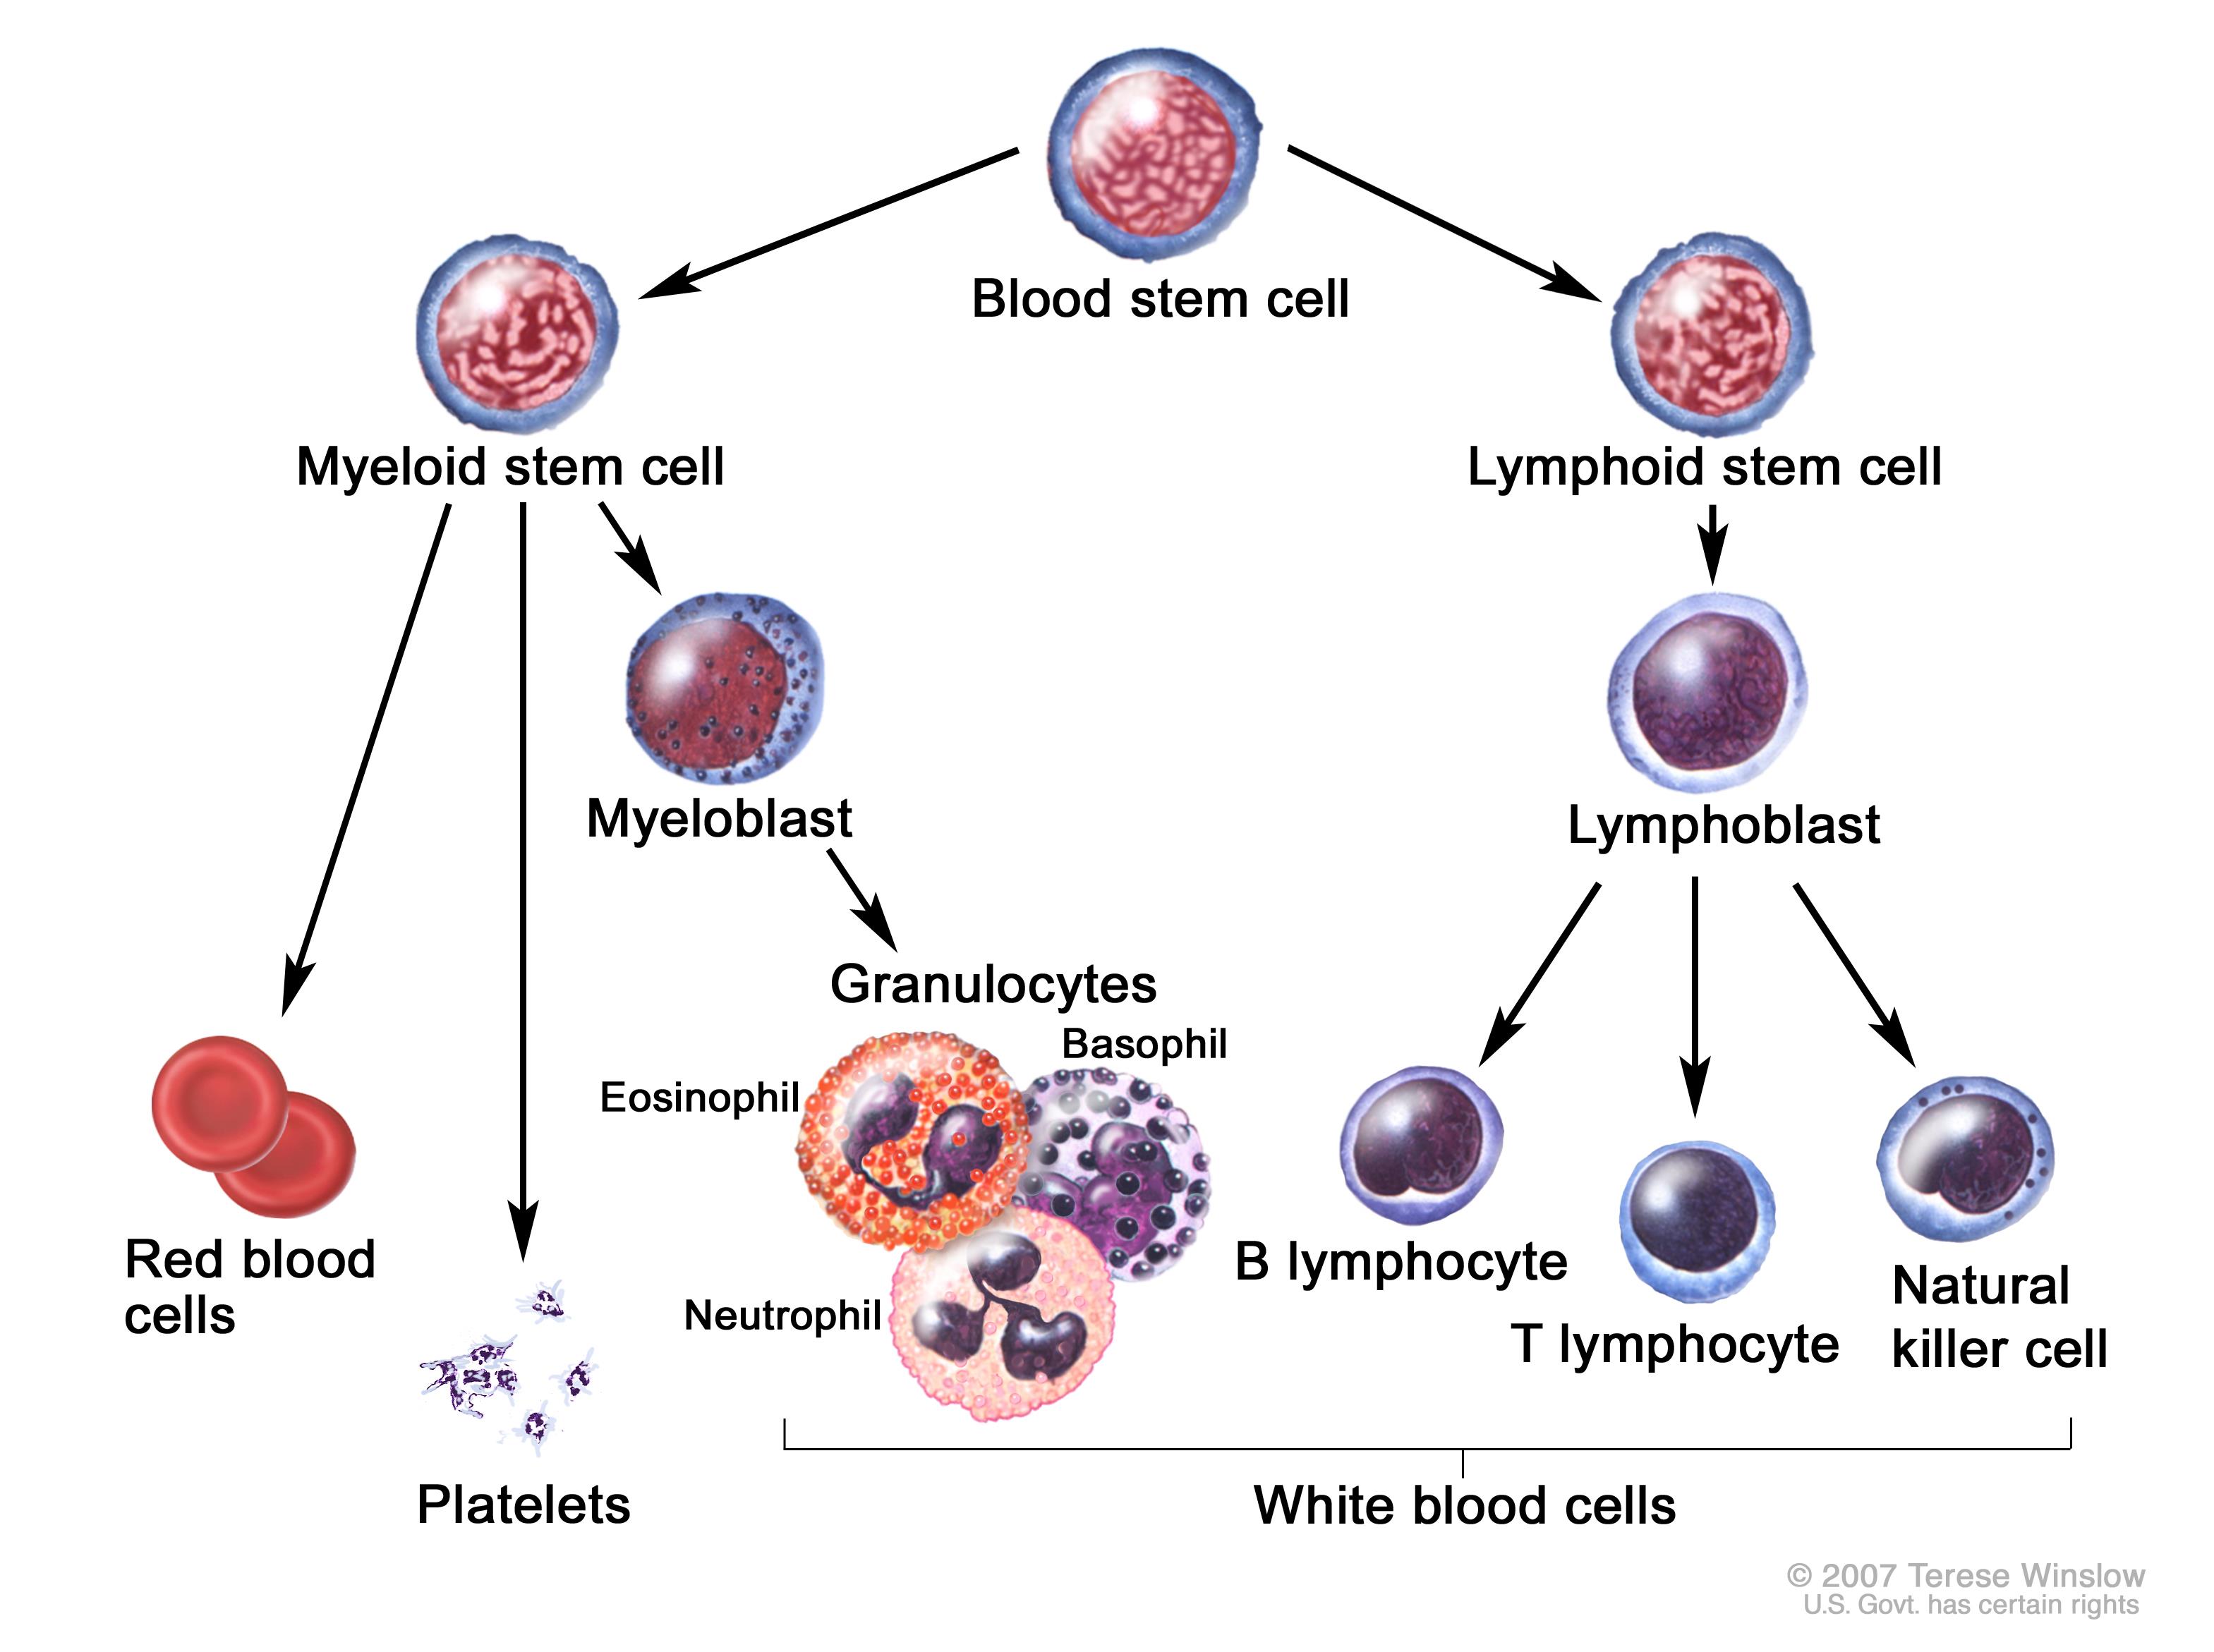 Myelogenous Leukemia (National Cancer Institute www.cancer.gov)